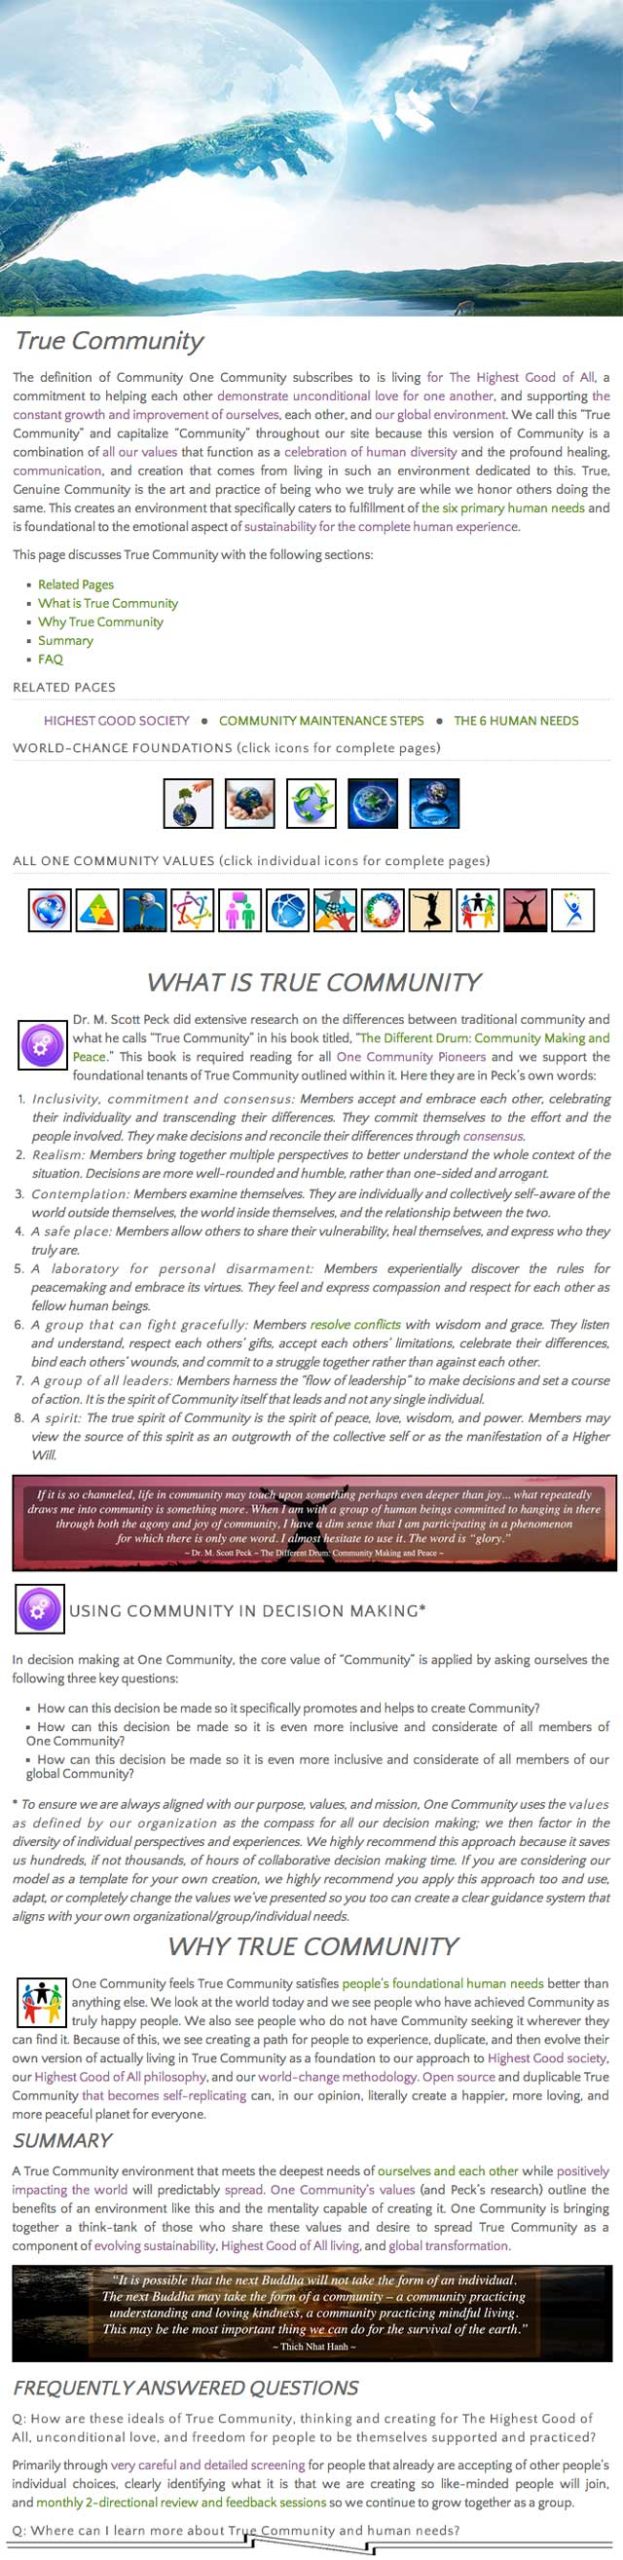 True Community page, One Community, Regenerative World Building